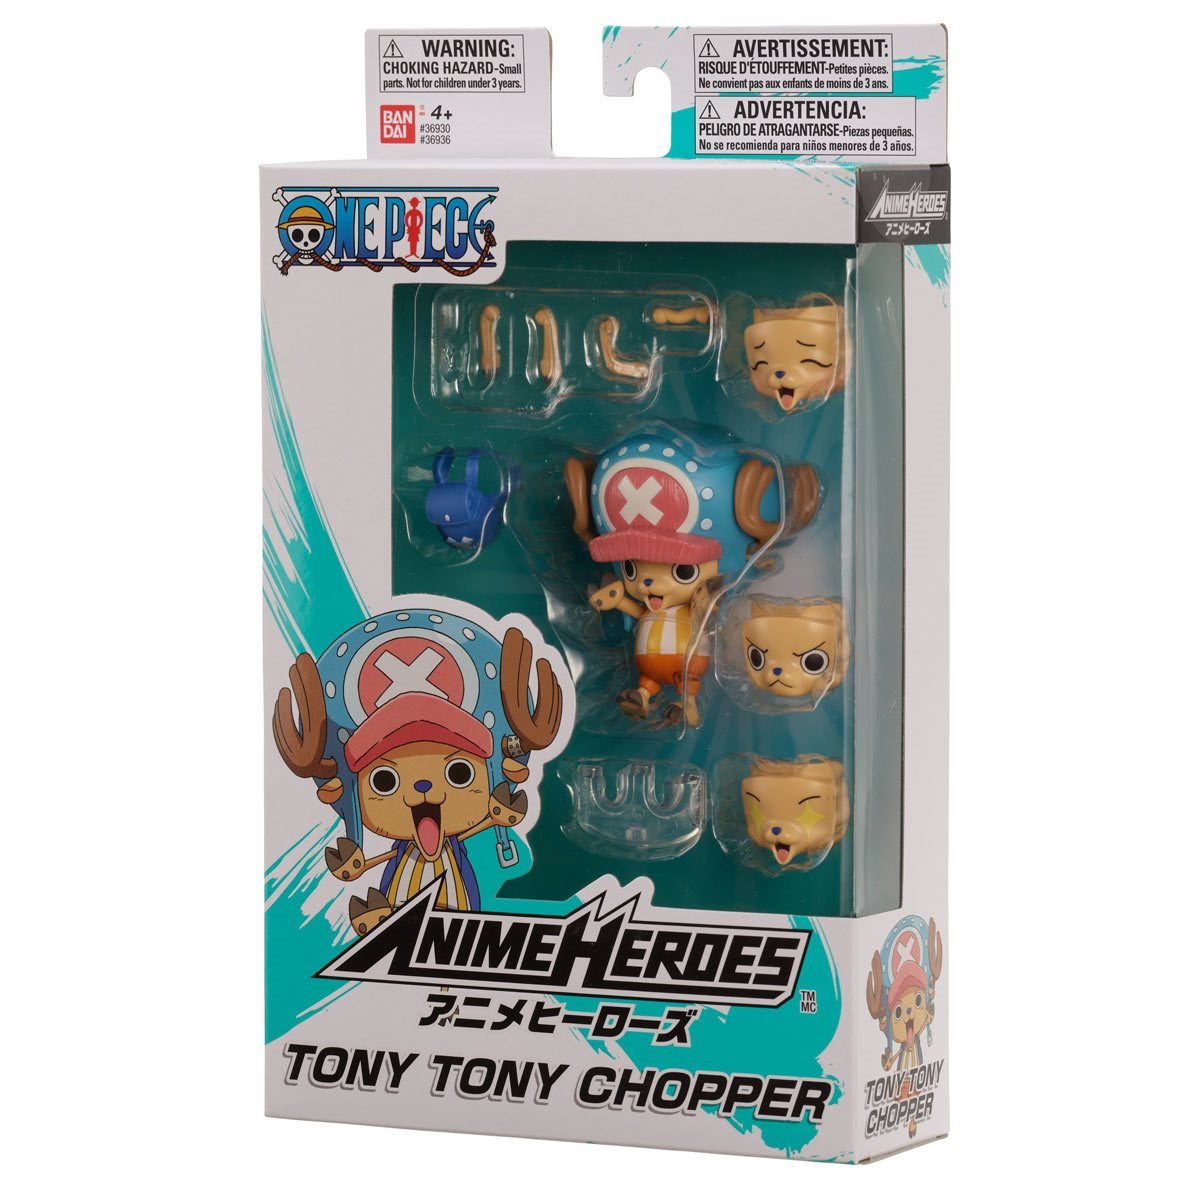 BANDAI NAMCO One Piece Anime Heroes Tony Tony Chopper Action Figure